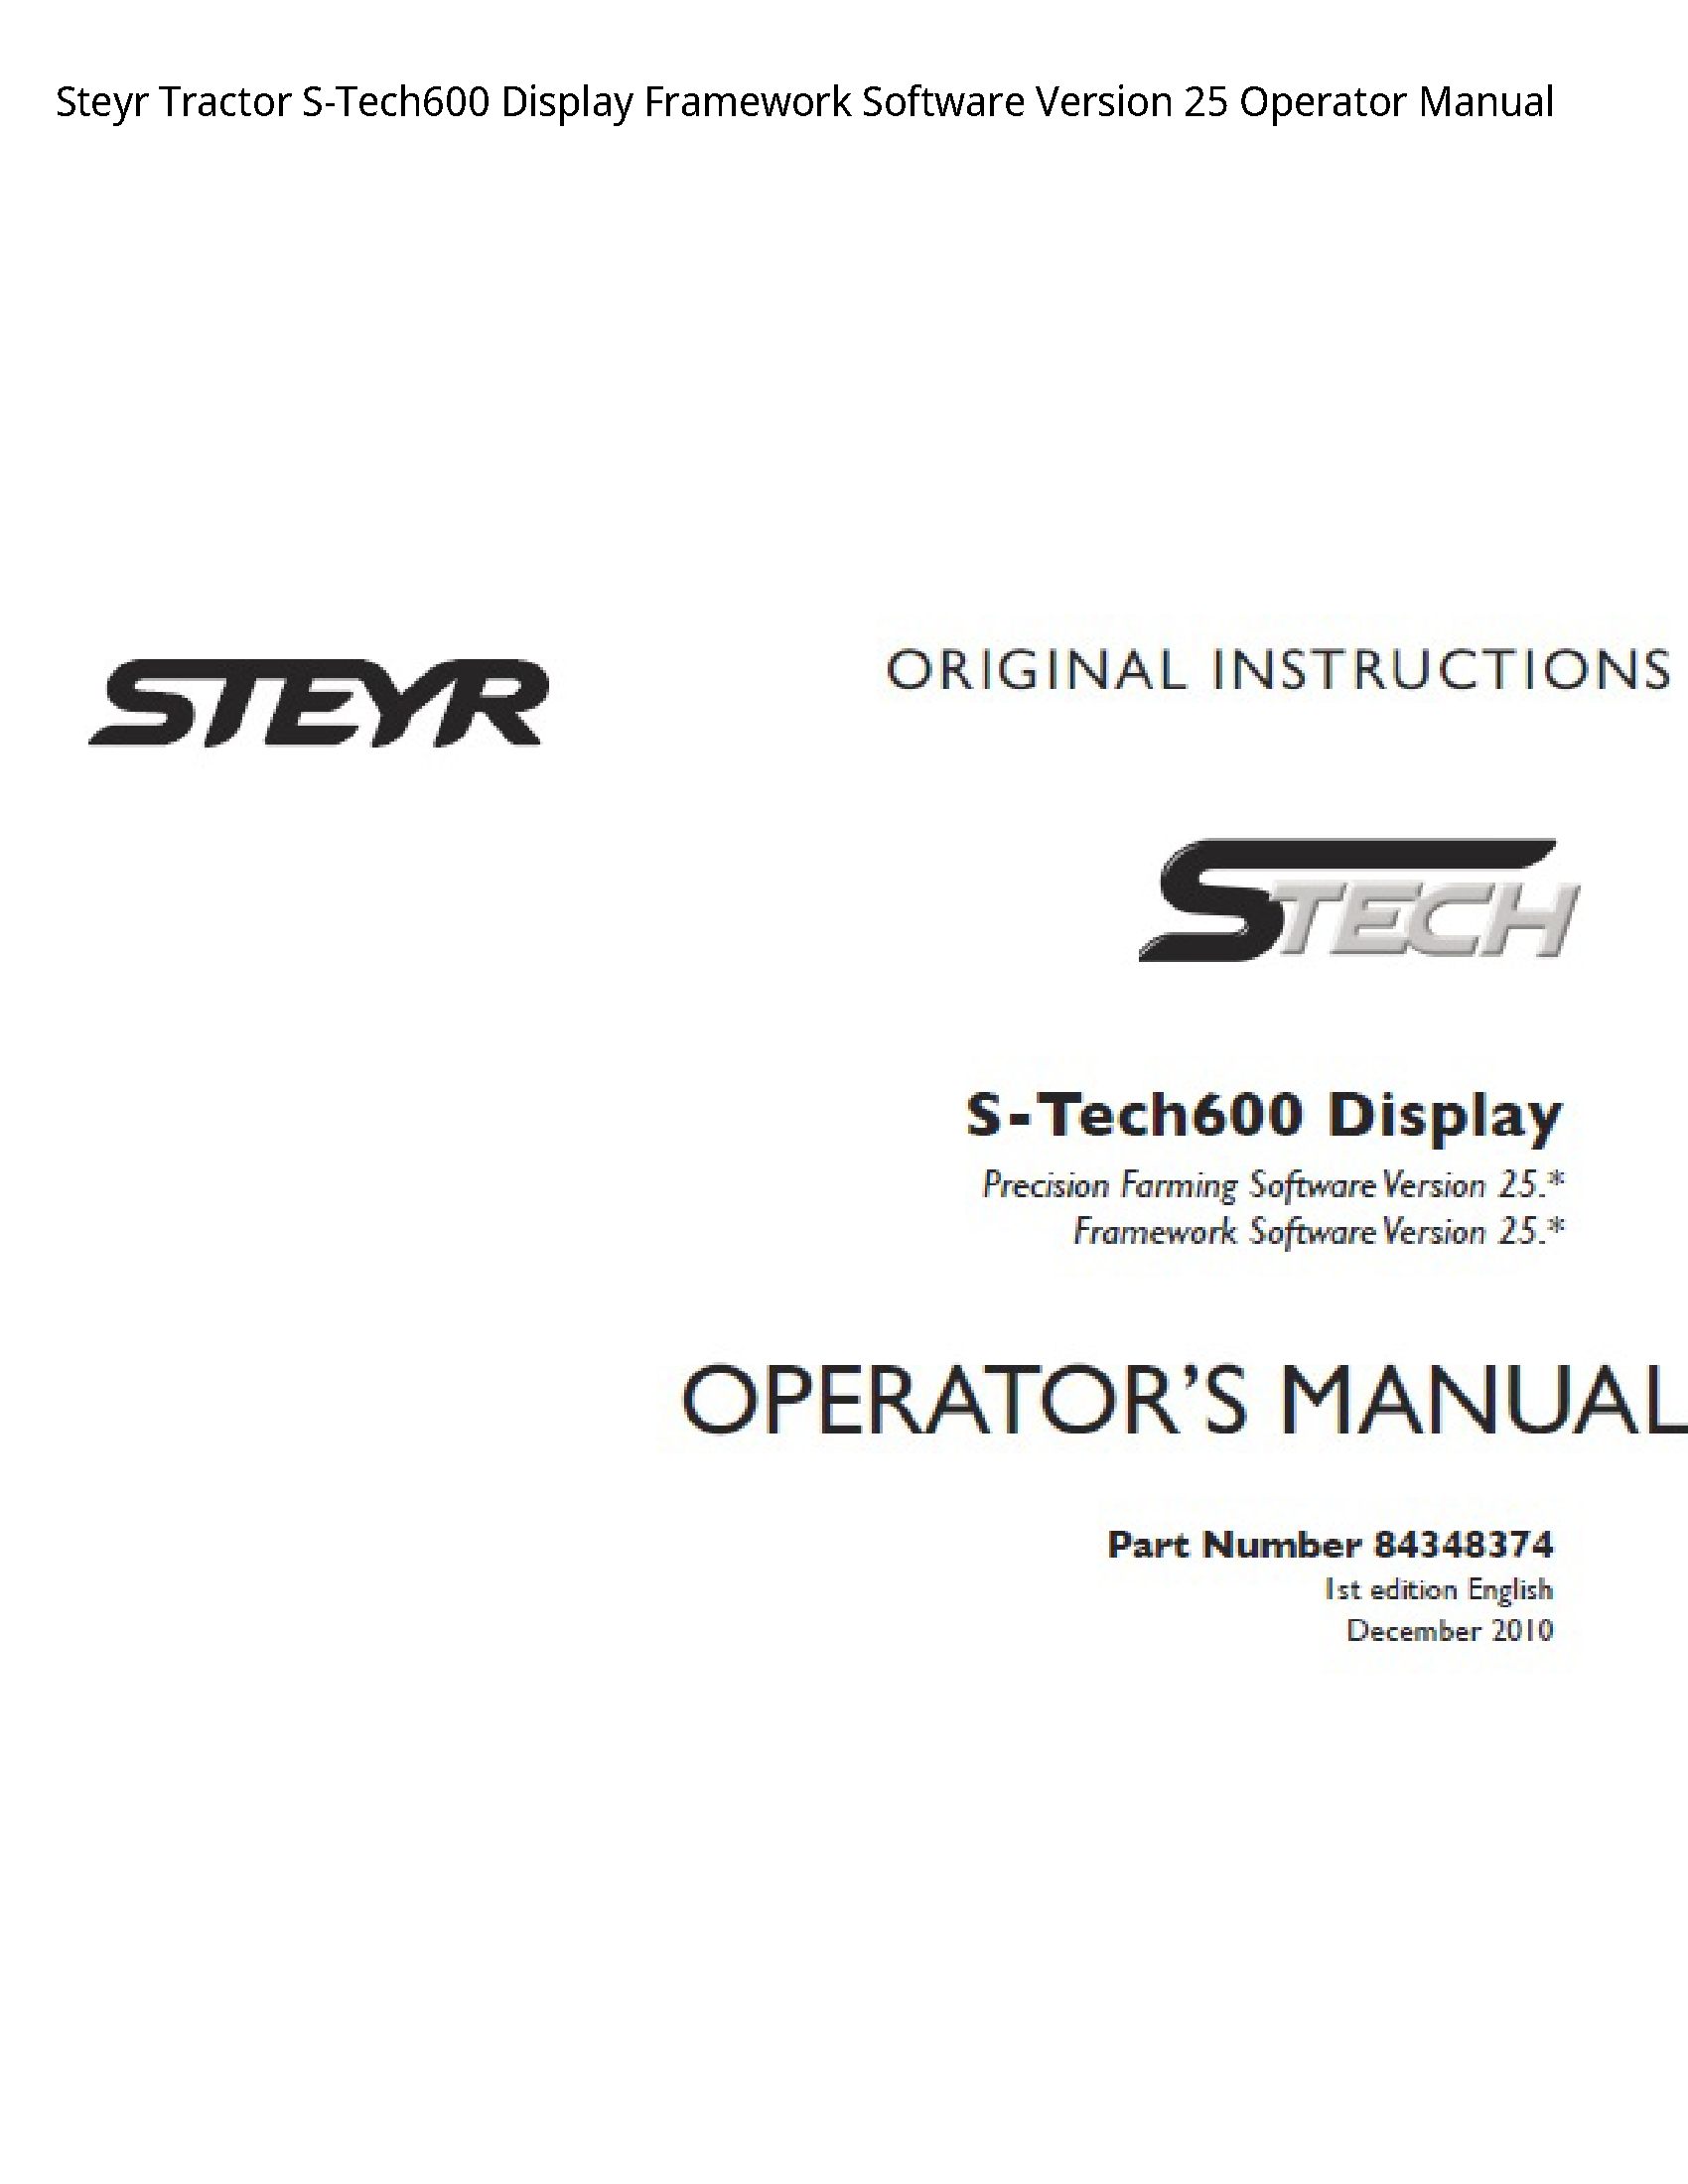 Steyr S-Tech600 Tractor Display Framework Software Version Operator manual